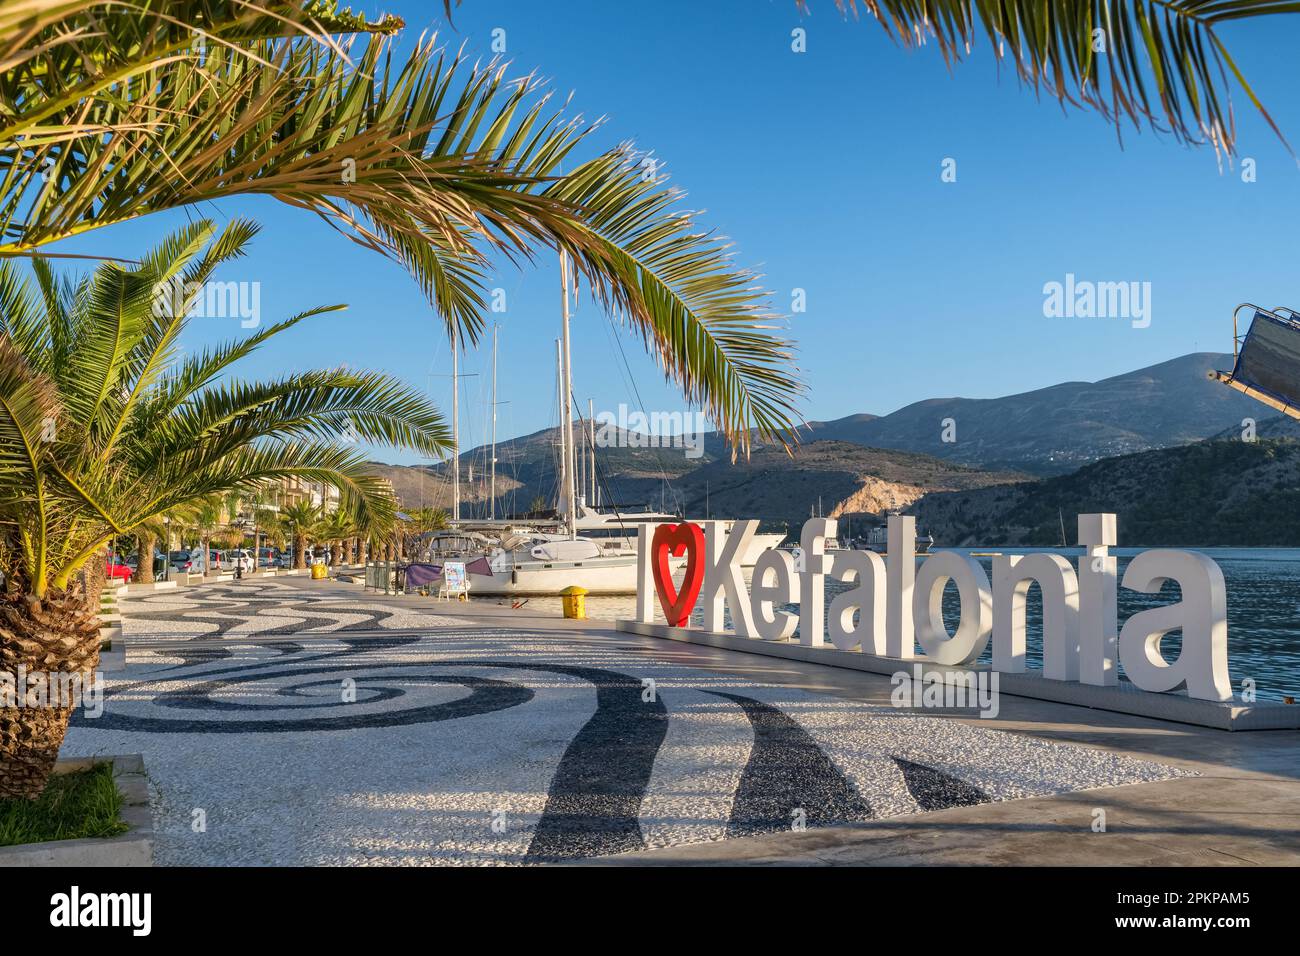 Waterfront of Argostoli Town on Kefalonia island, Ionian sea, Greece Stock Photo